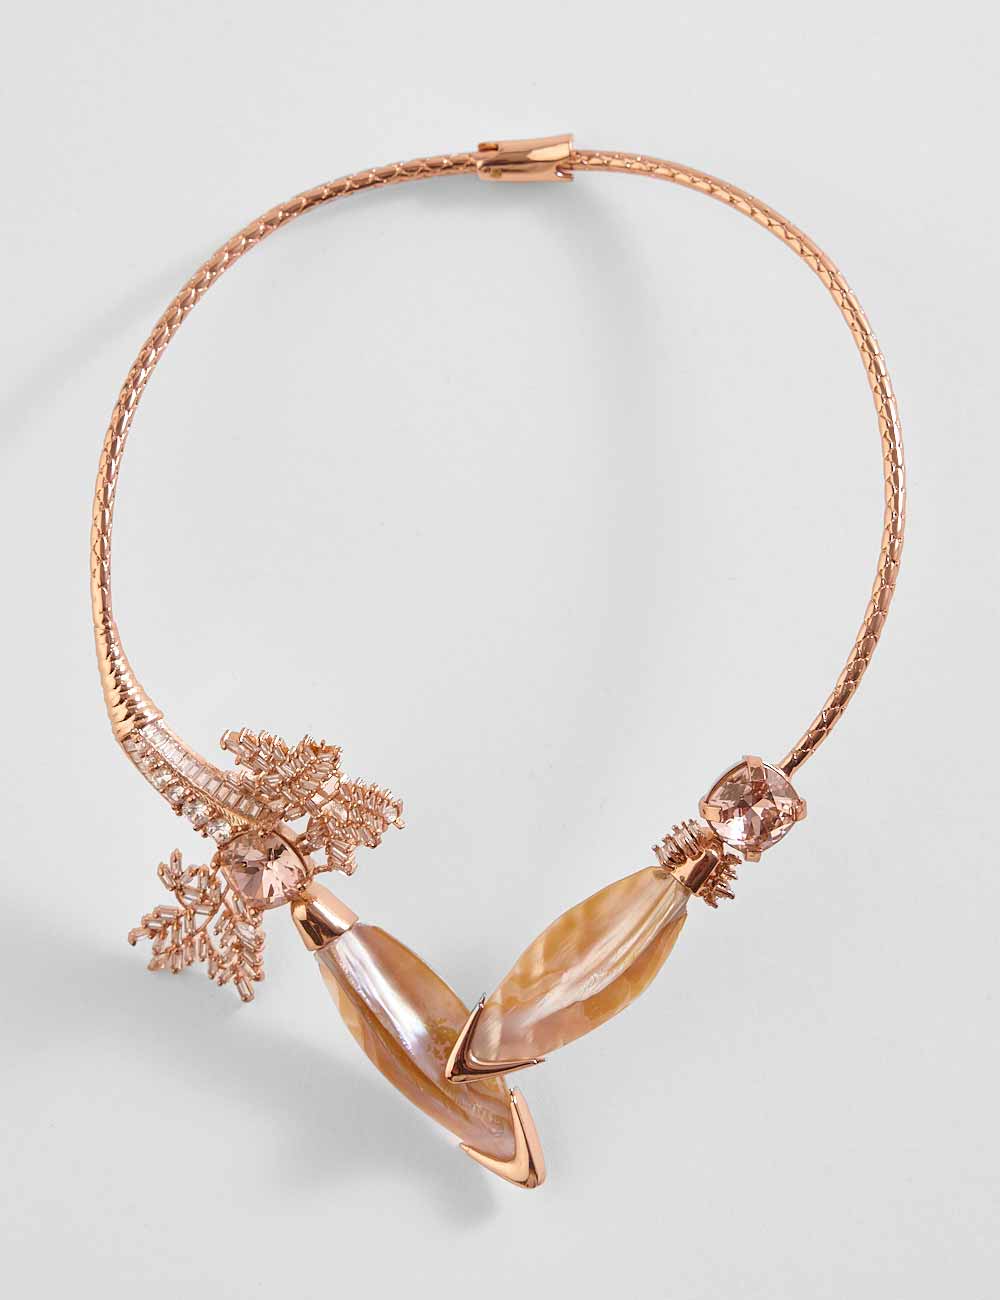 Shop Rubans Voguish Studded Butterfly Open Choker Necklace Online at Rubans